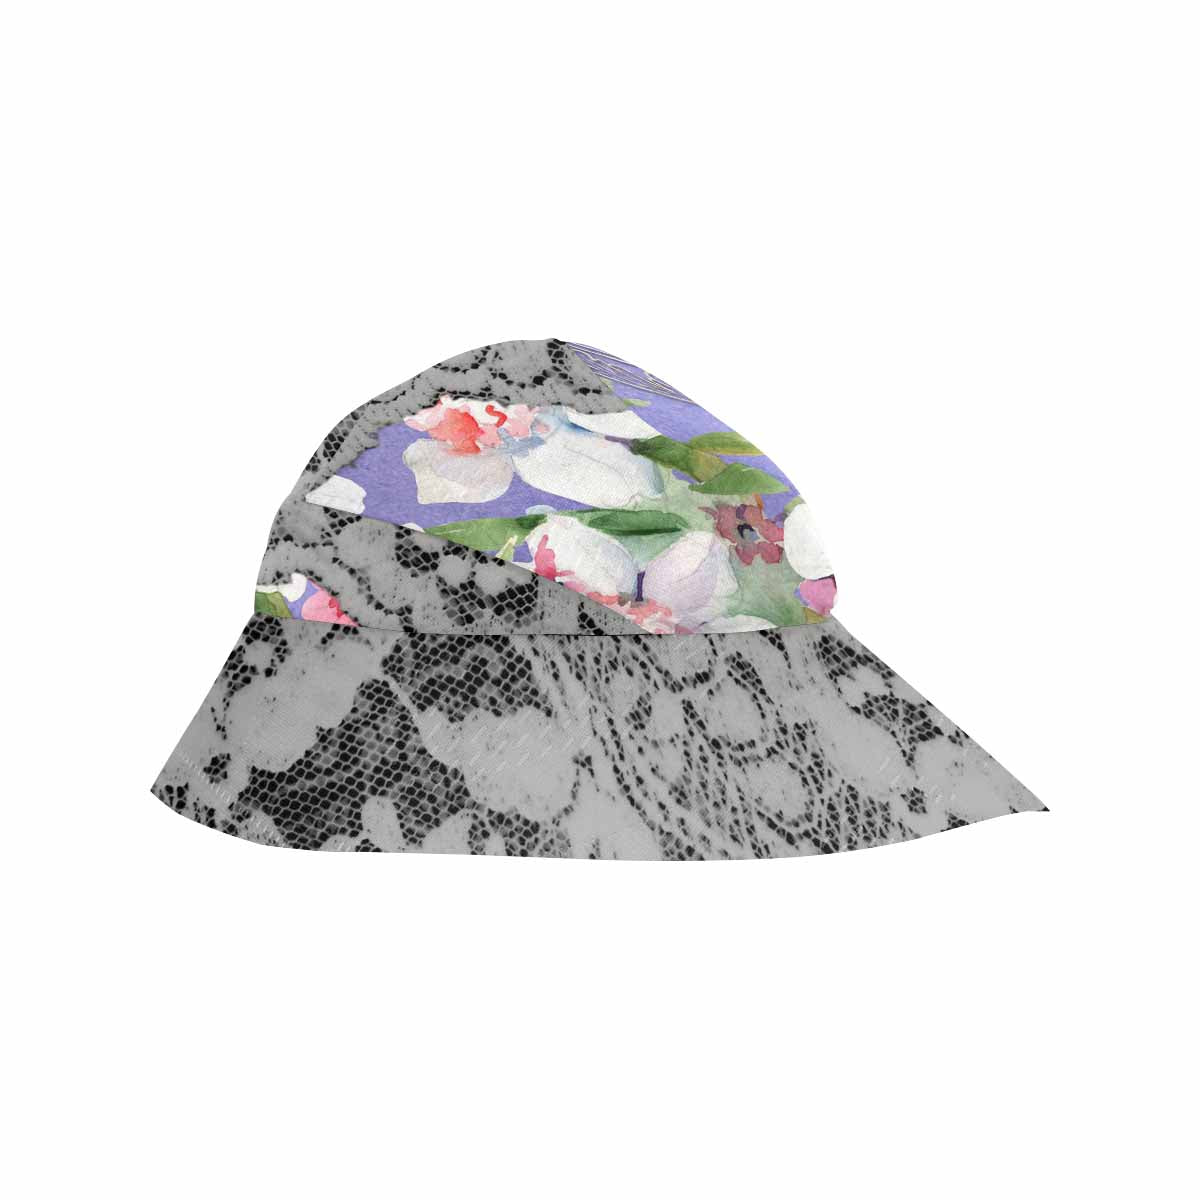 Victorian lace print, wide brim sunvisor Hat, outdoors hat, design 45